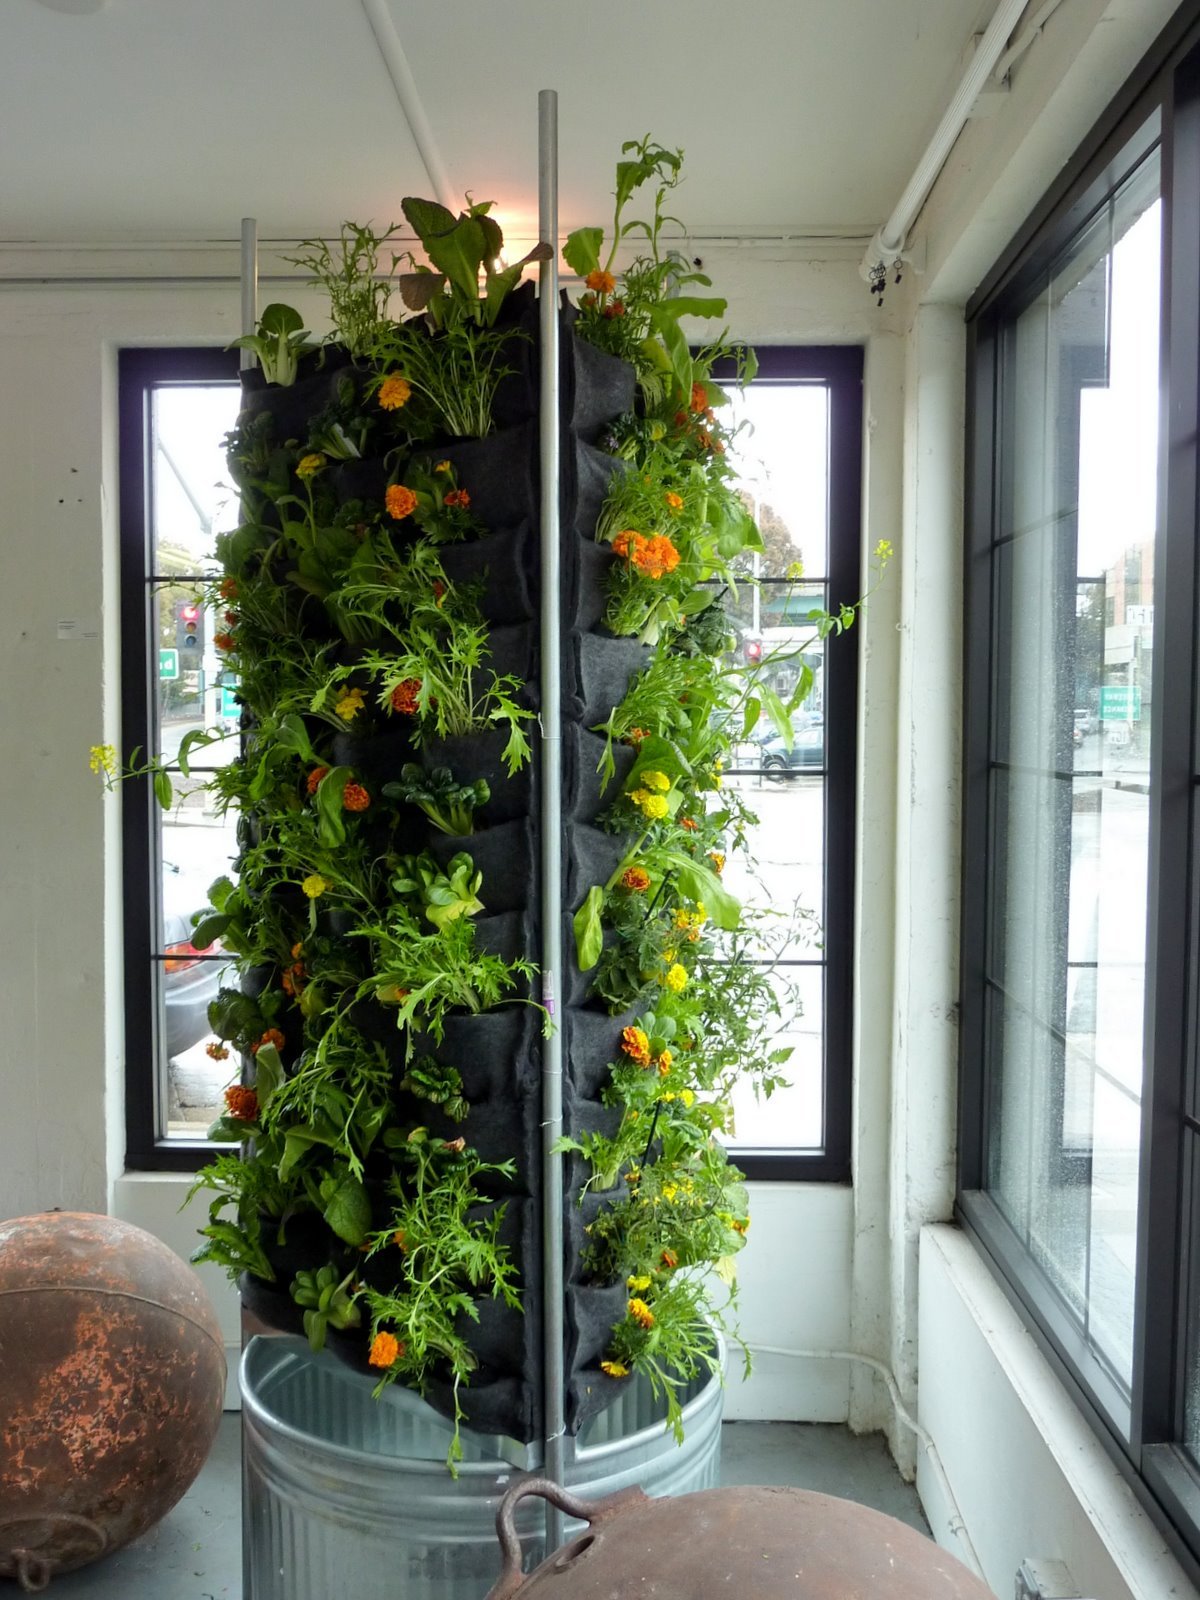 ... On Walls vertical garden systems: Aquaponic Vertical Vegetable Garden